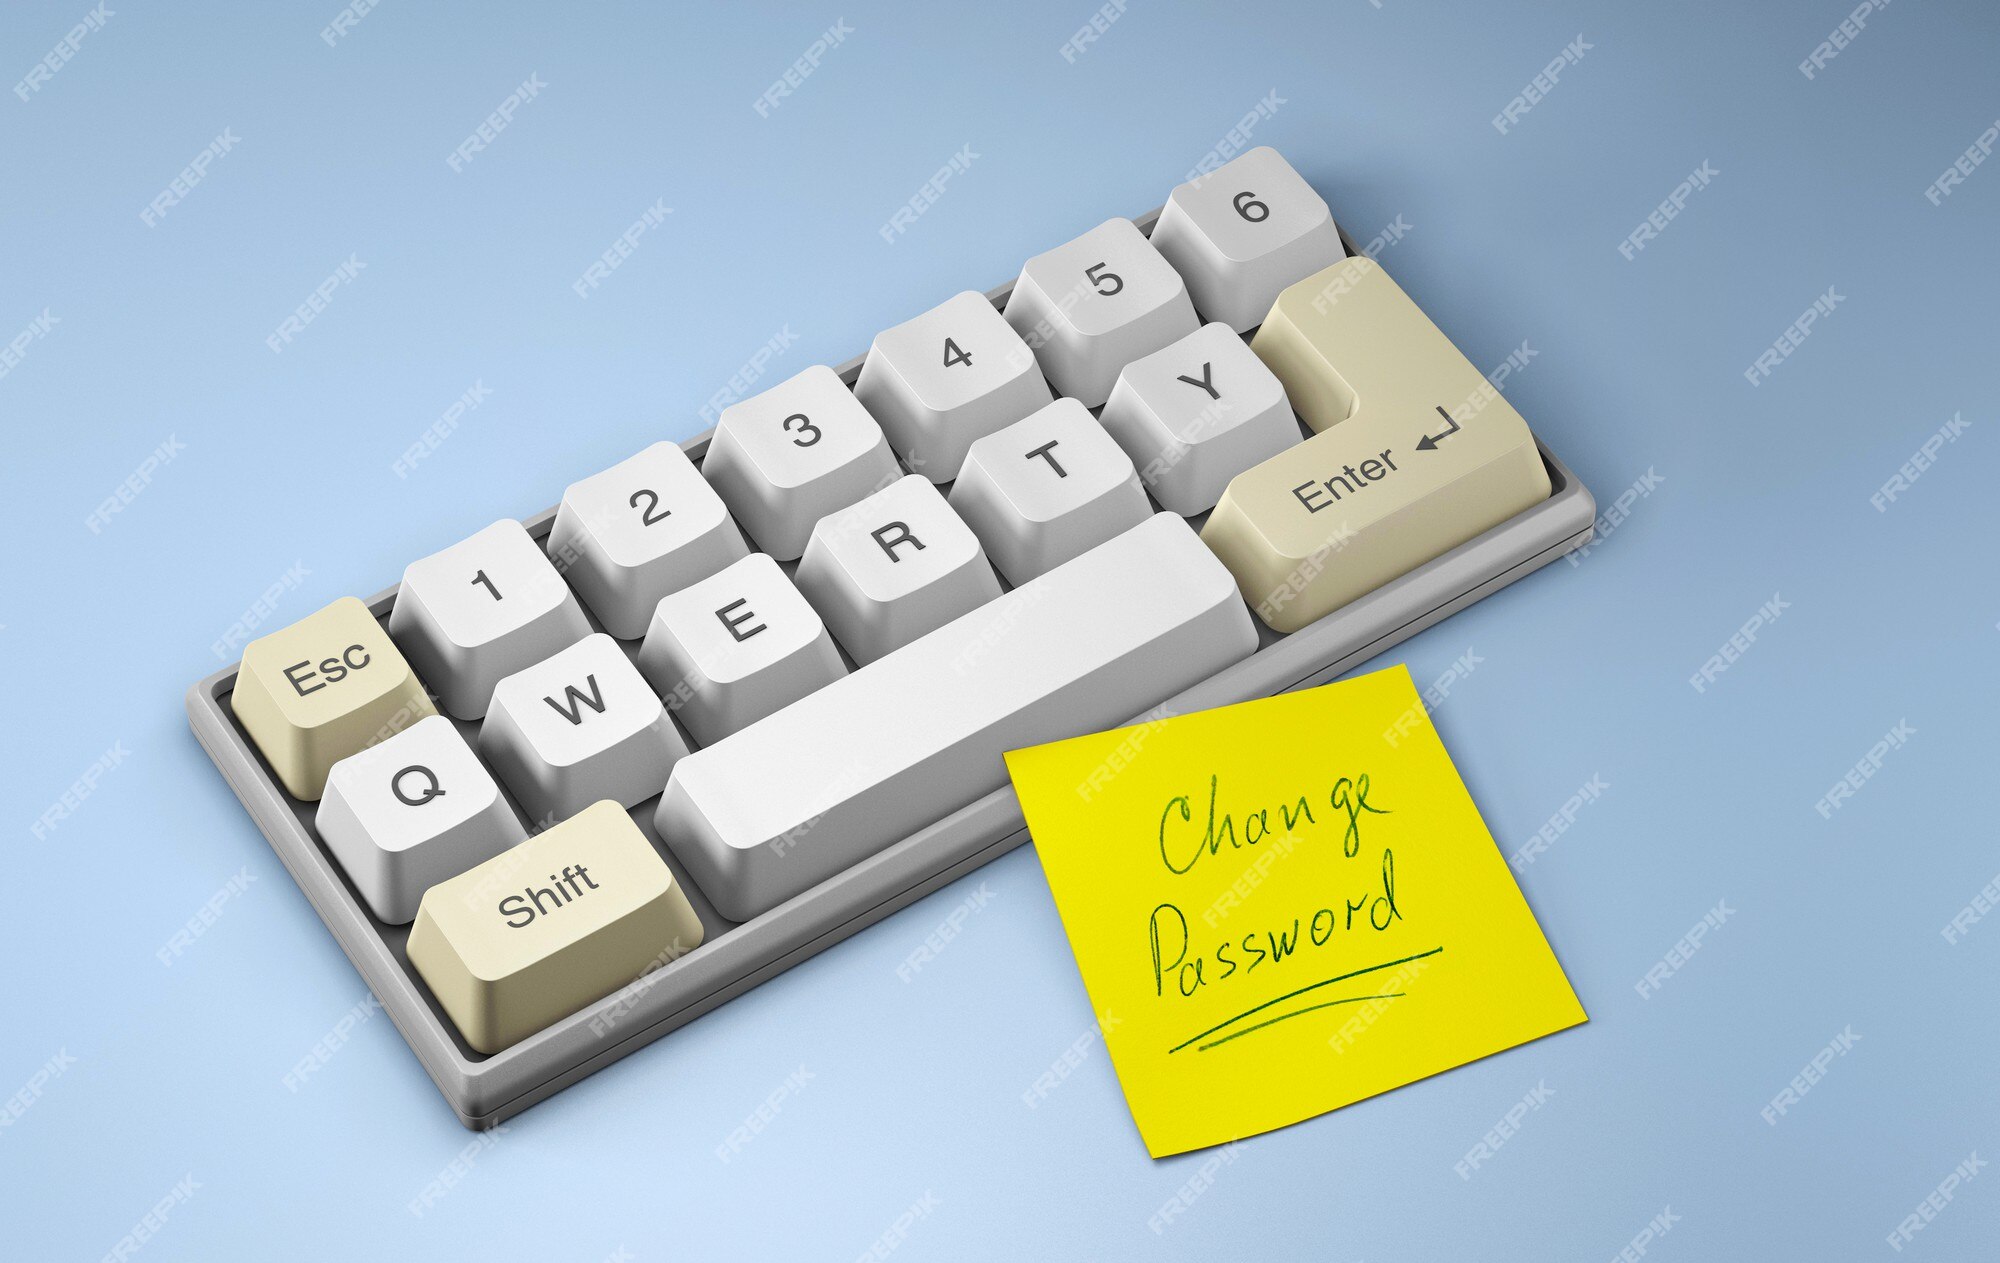 Menselijk ras Voornaamwoord Hoe dan ook Verander wachtwoord. toetsenbord met letters qwerty en gele kantoorsticker  op een blauwe achtergrond. 3d render. | Premium Foto